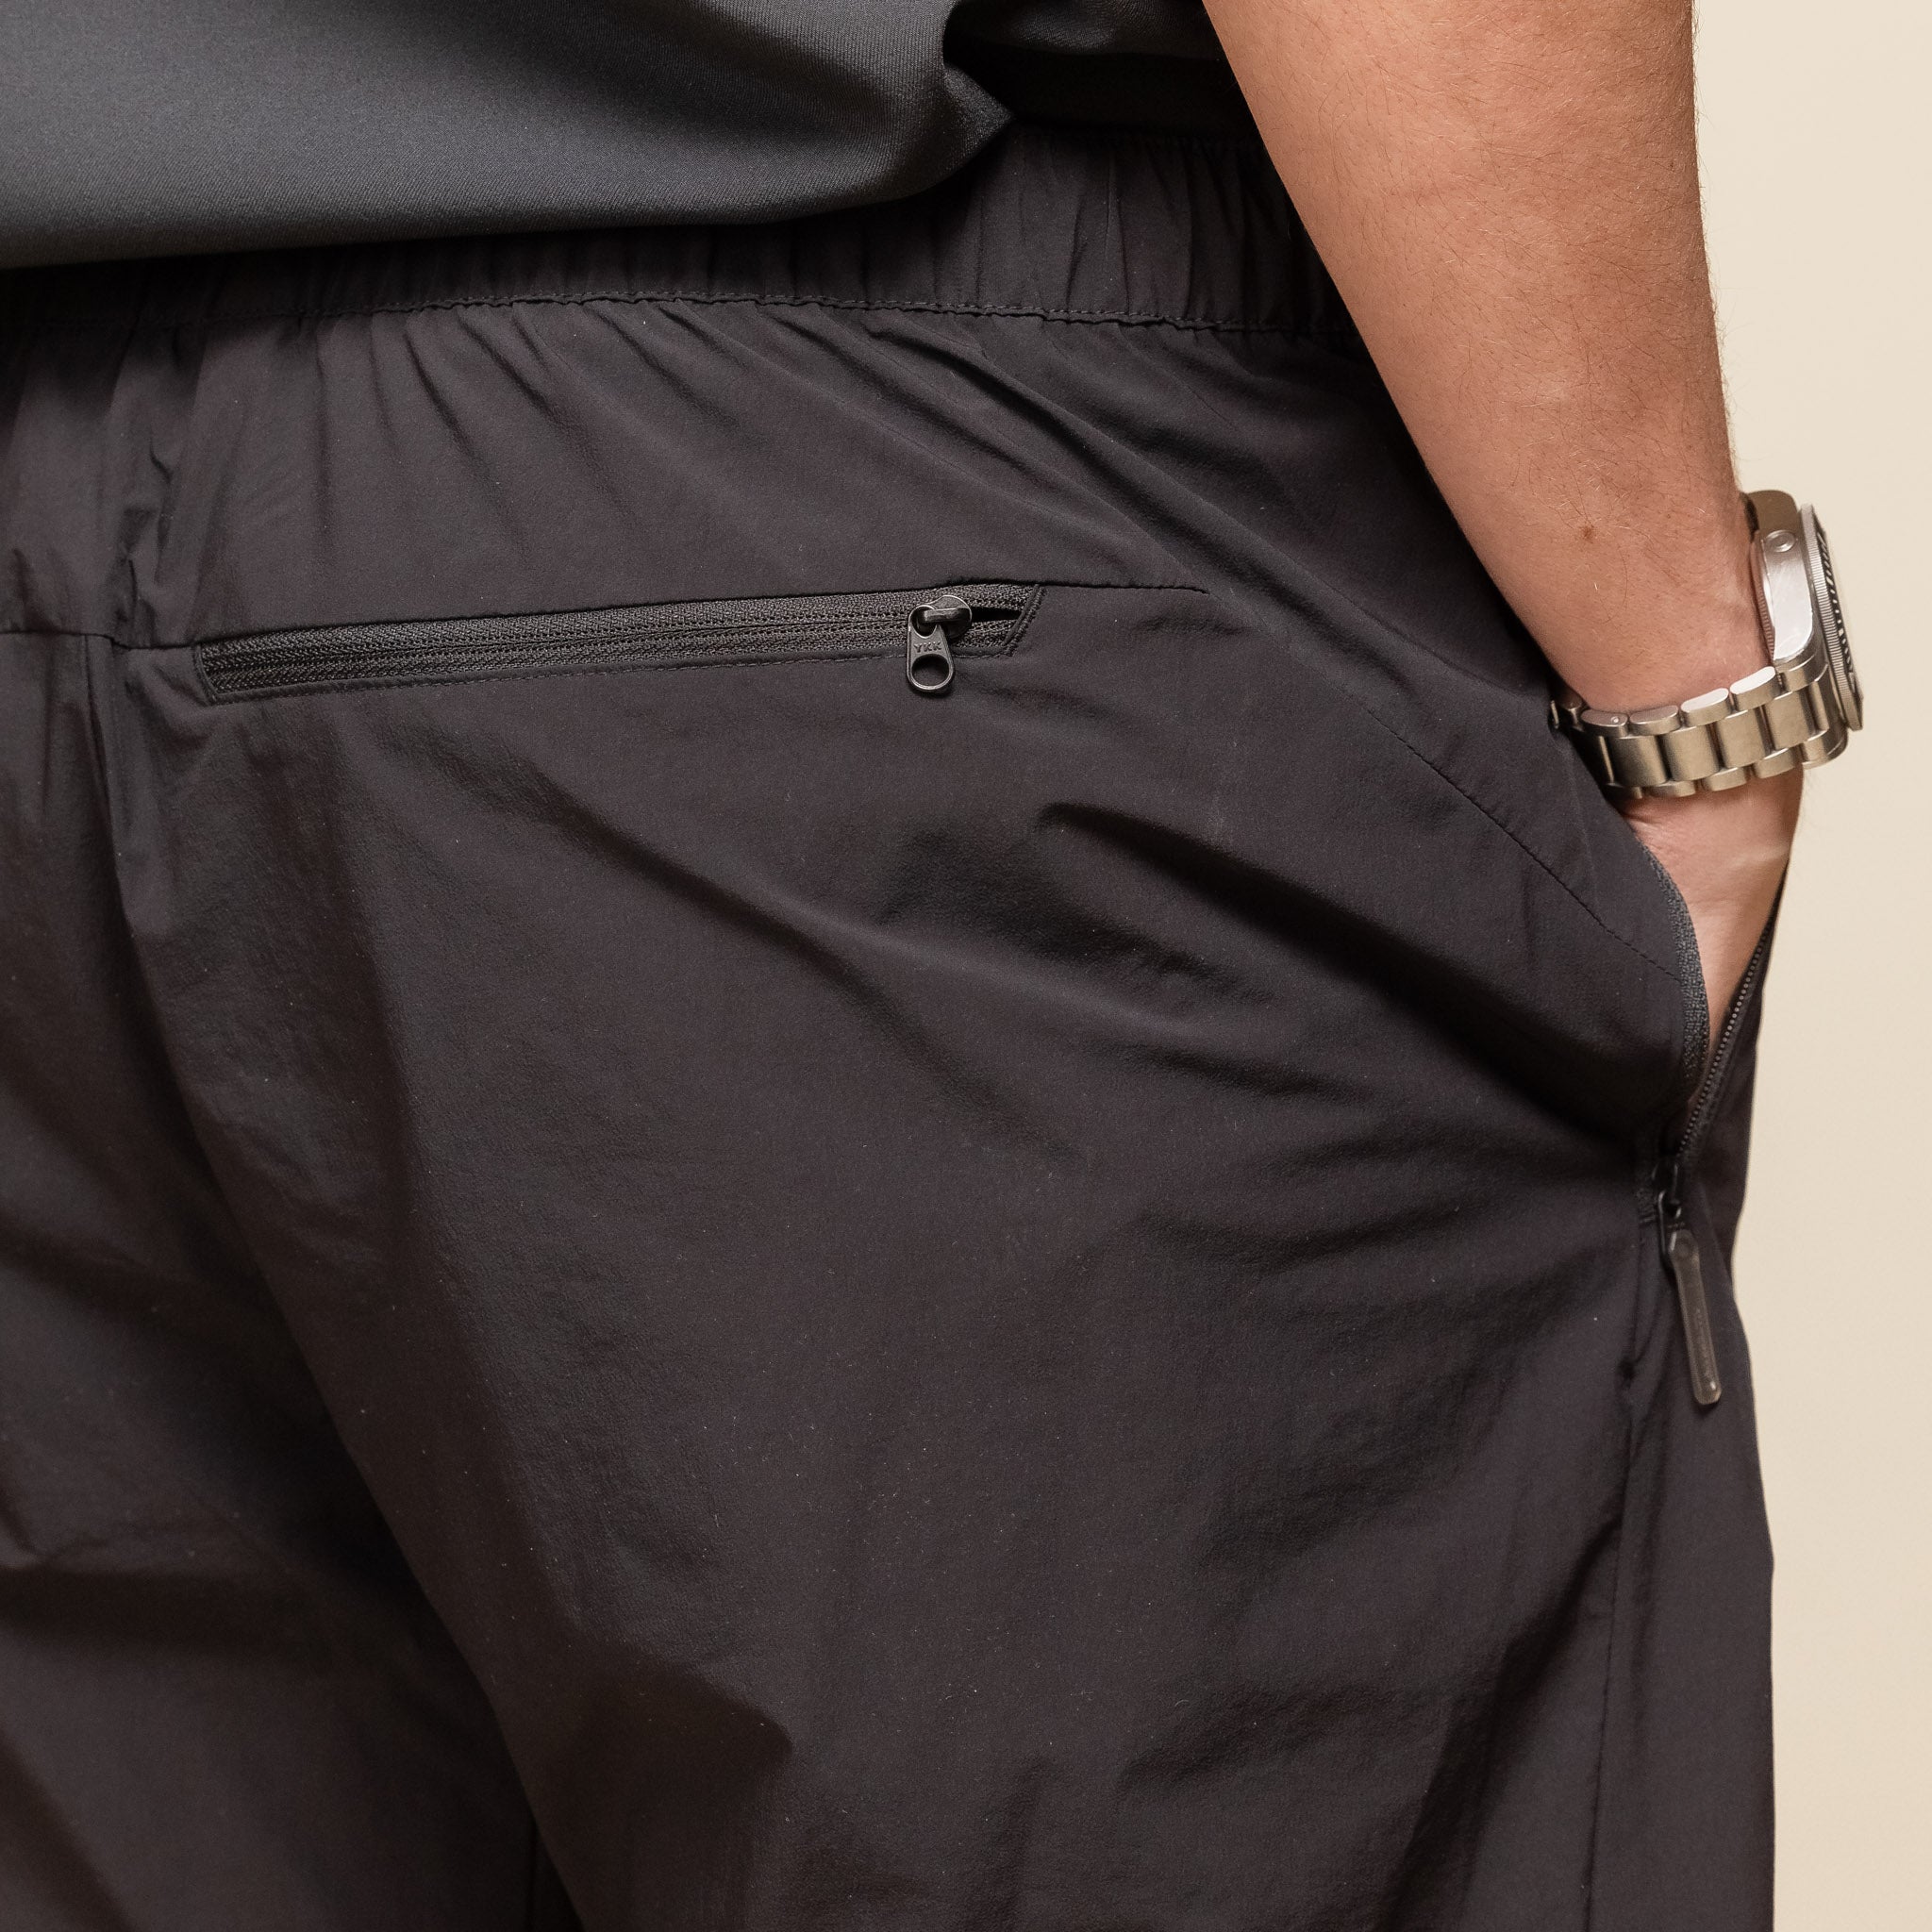 DOMXGD85U Descente 81 - Pocketable Light Half Pants - Black